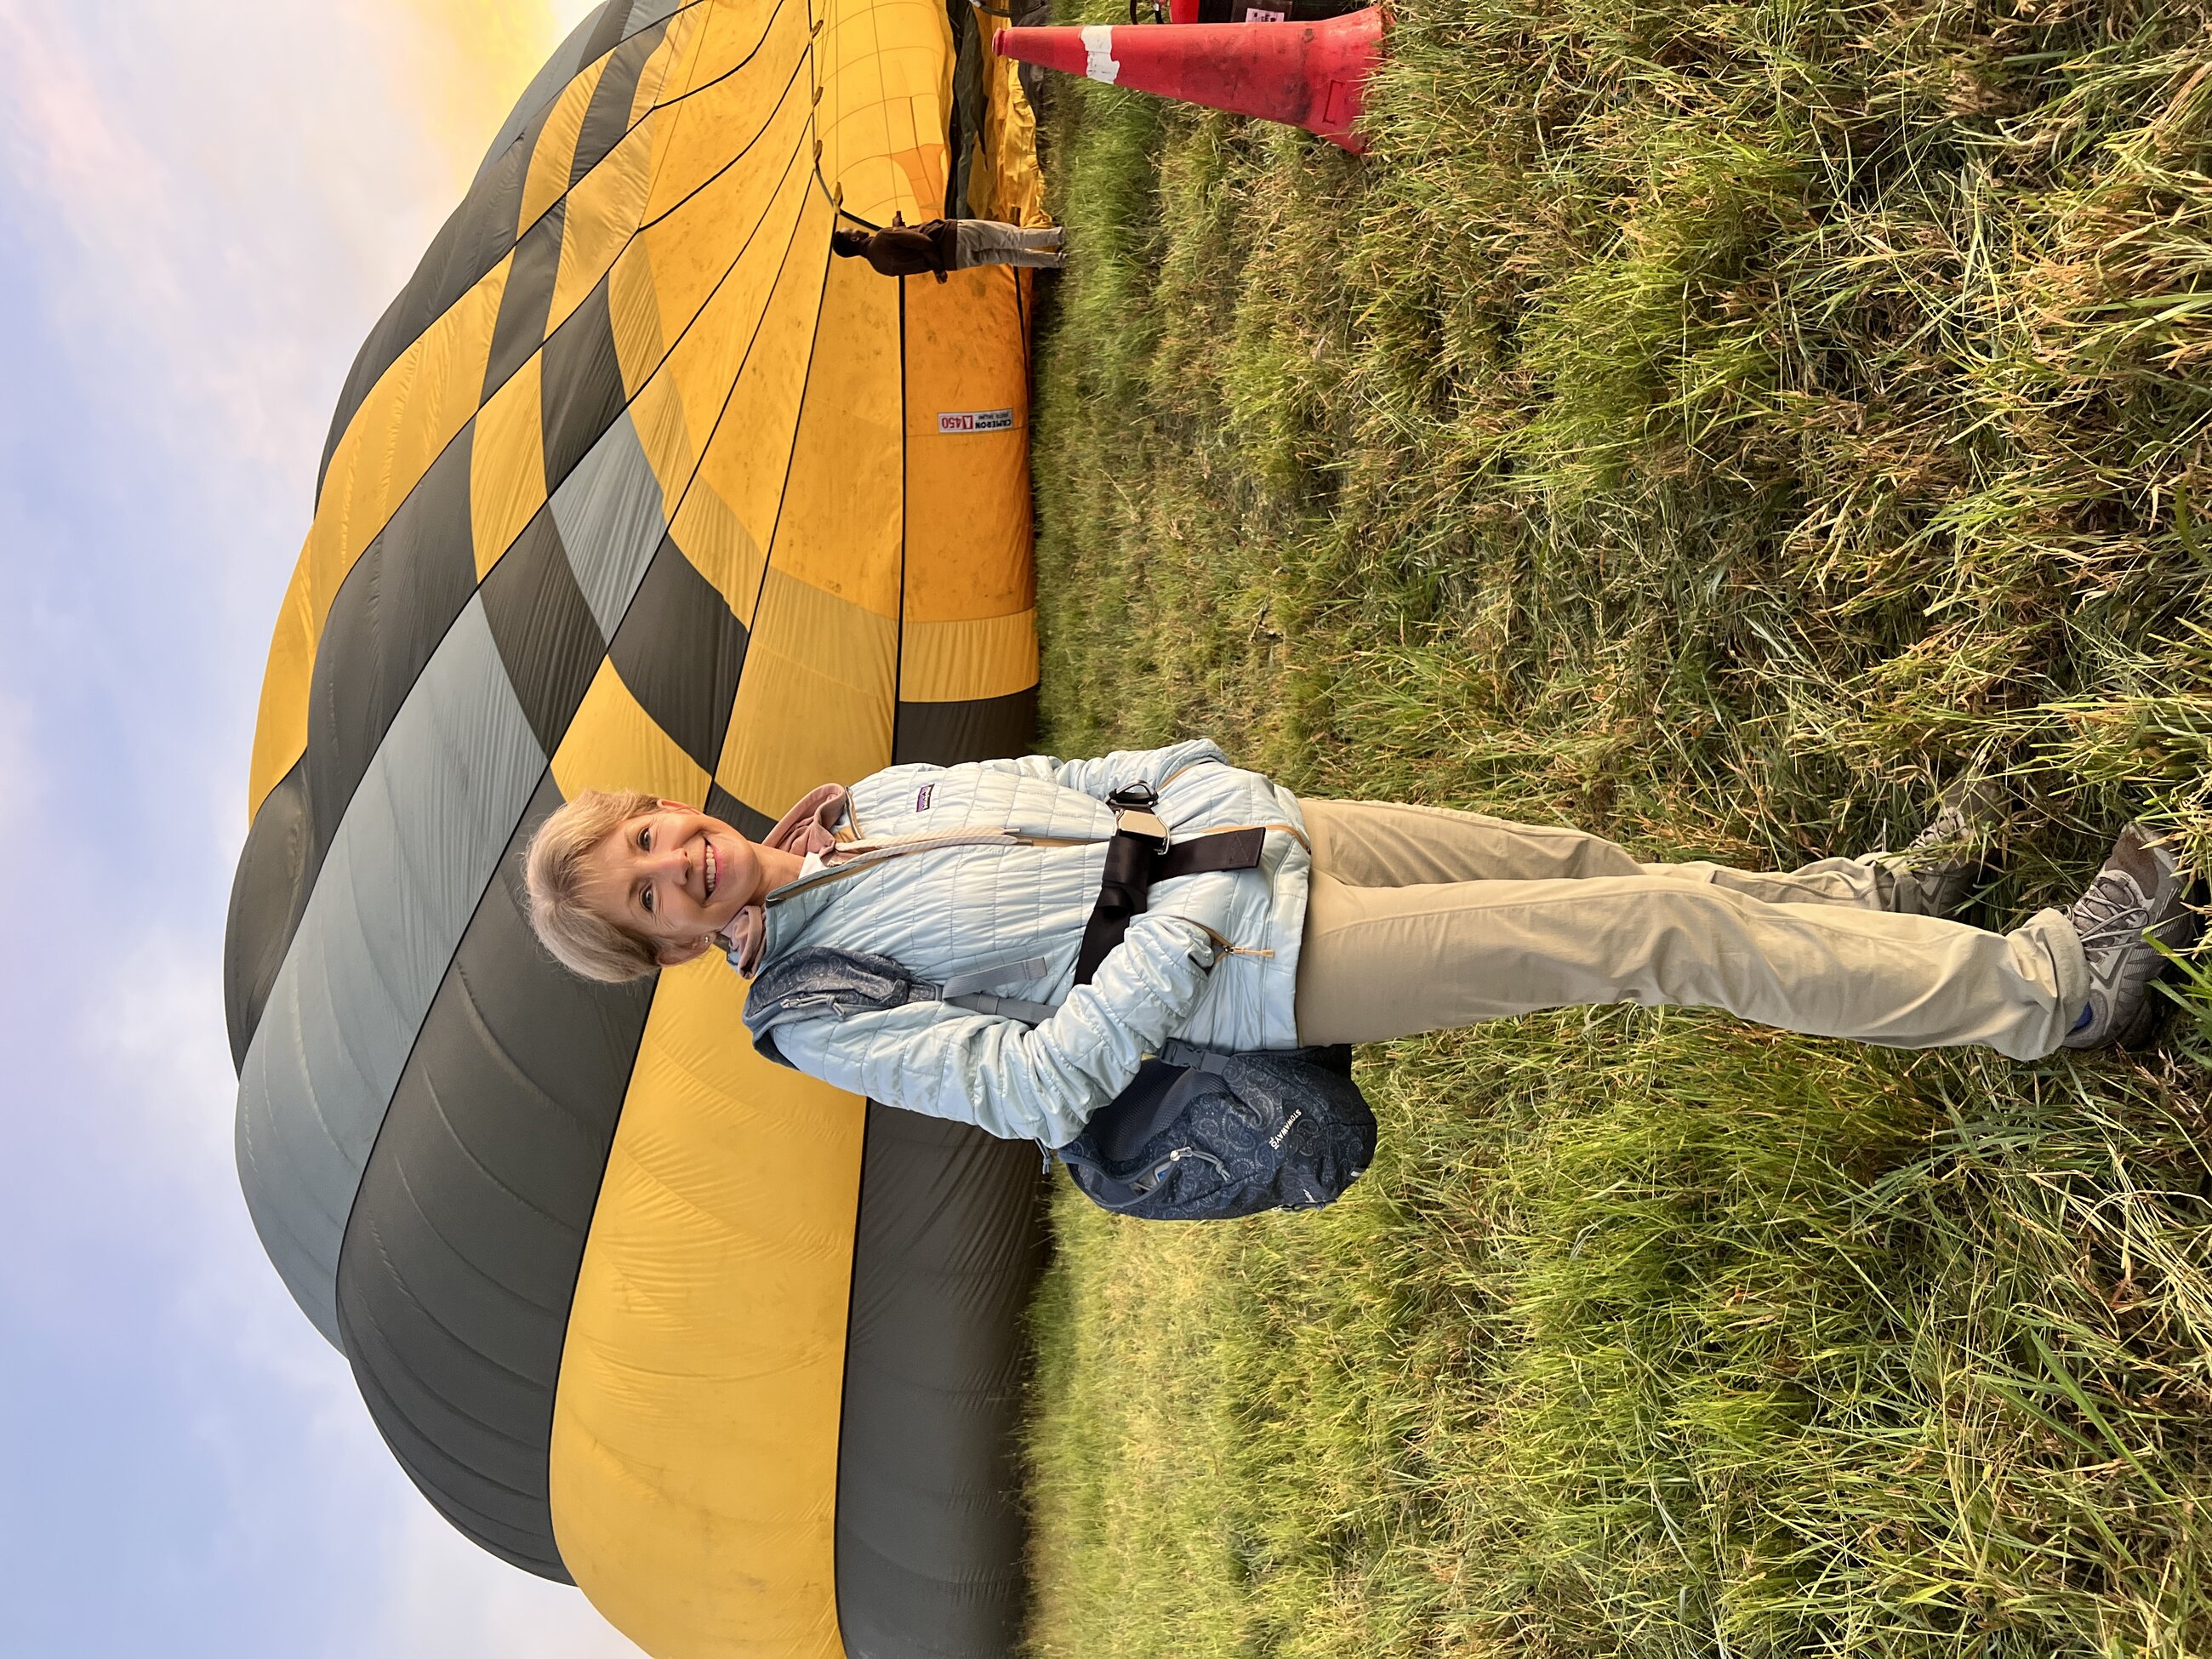 Hot Air Balloon Safari!